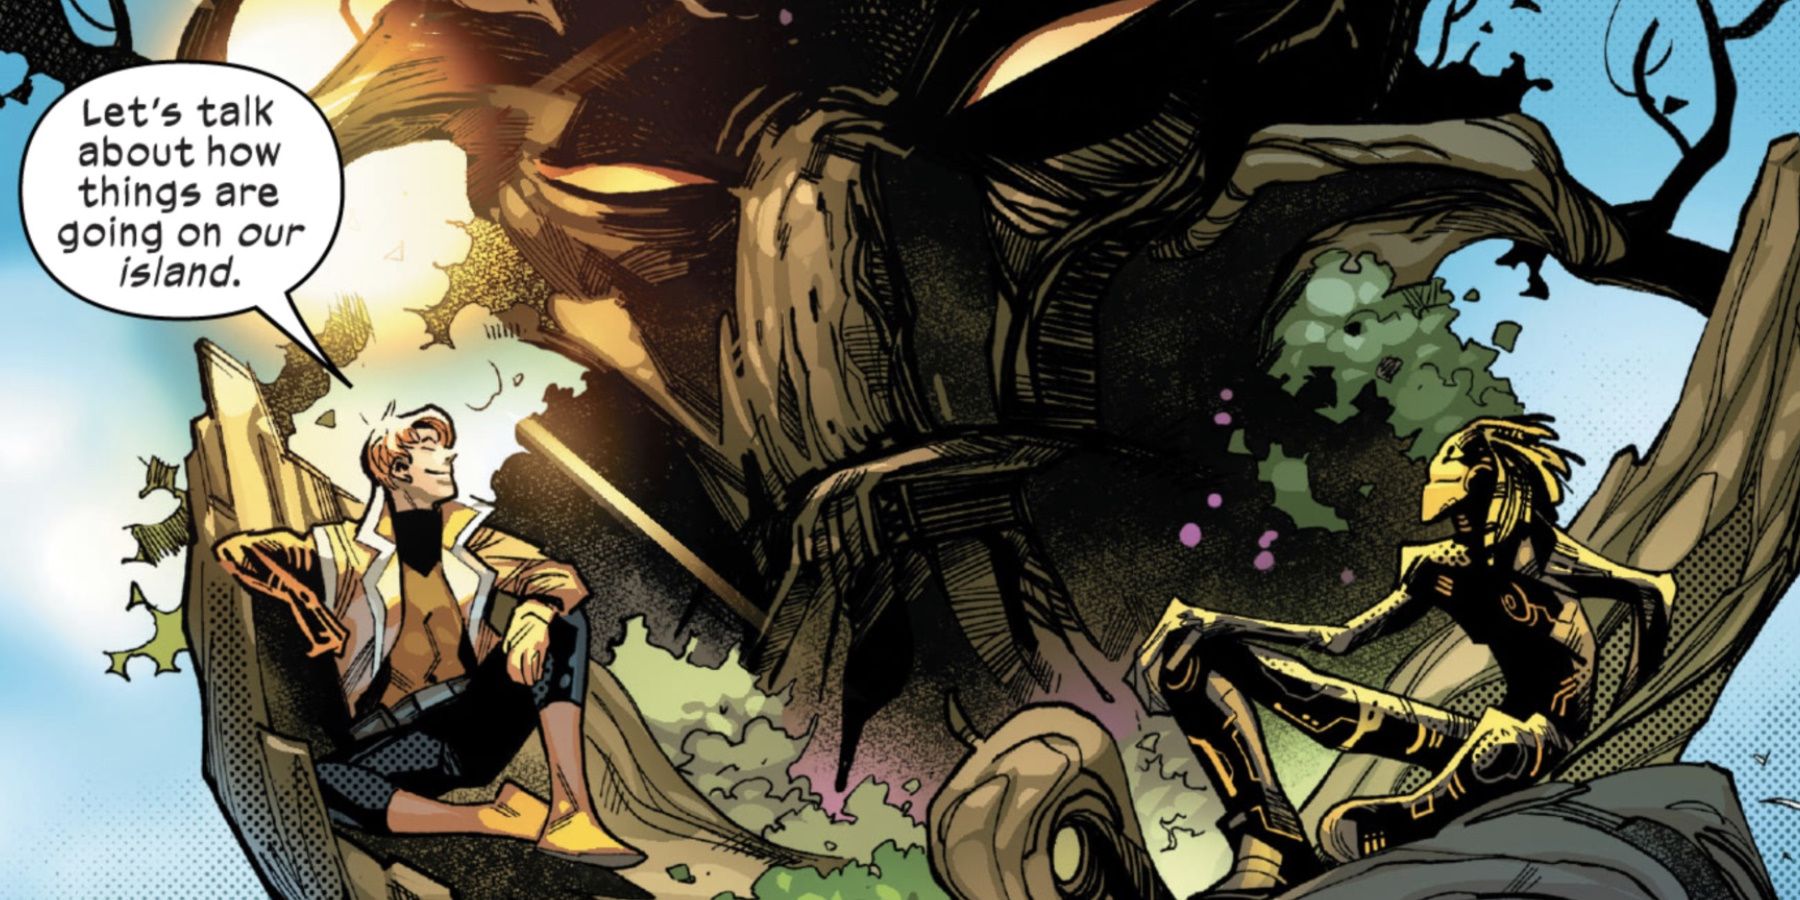 Cypher Doug and Krakoa talk in X-Men comics.